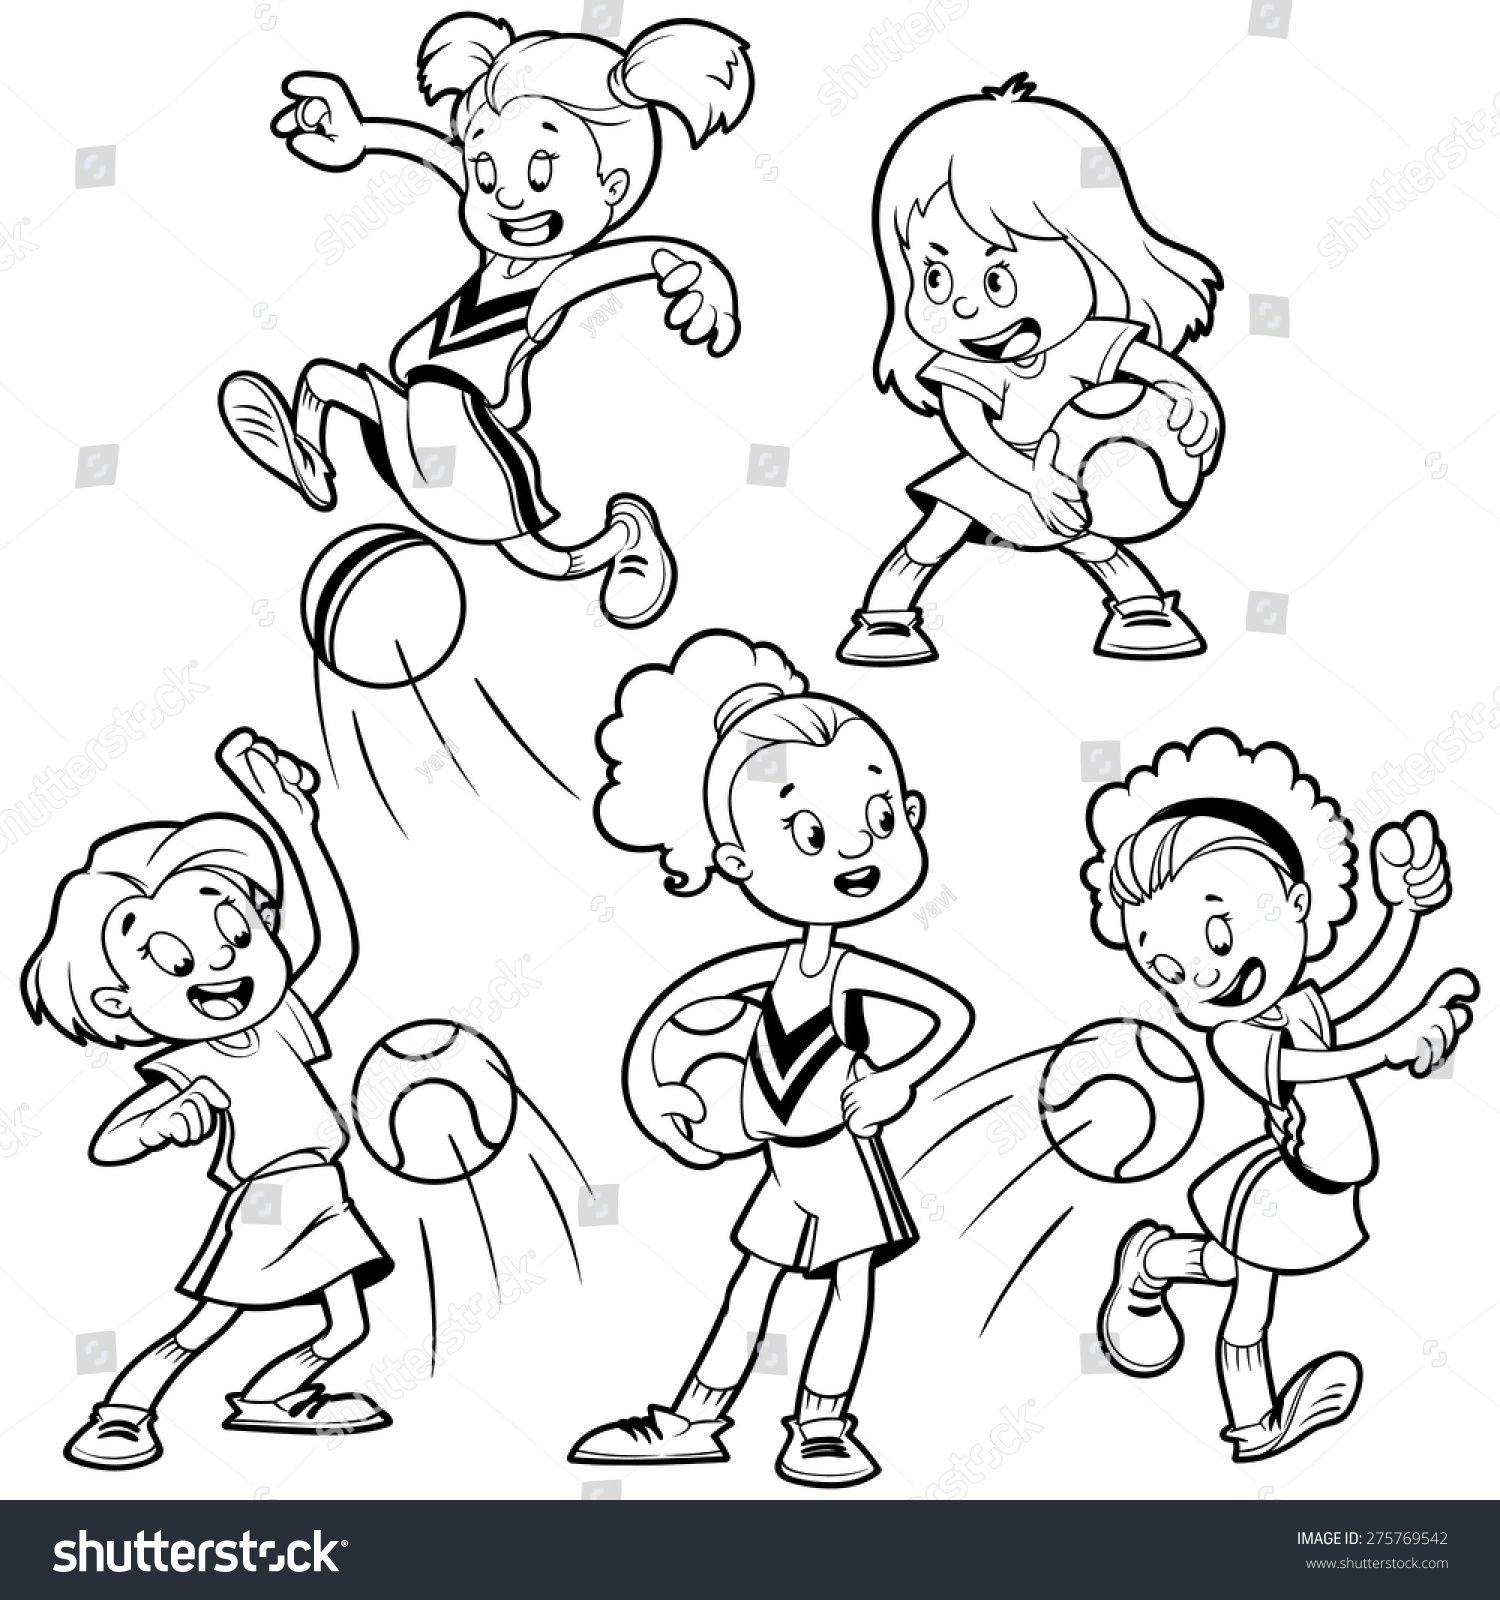 Cartoon kids playing dodgeball vector clip stock vector royalty free